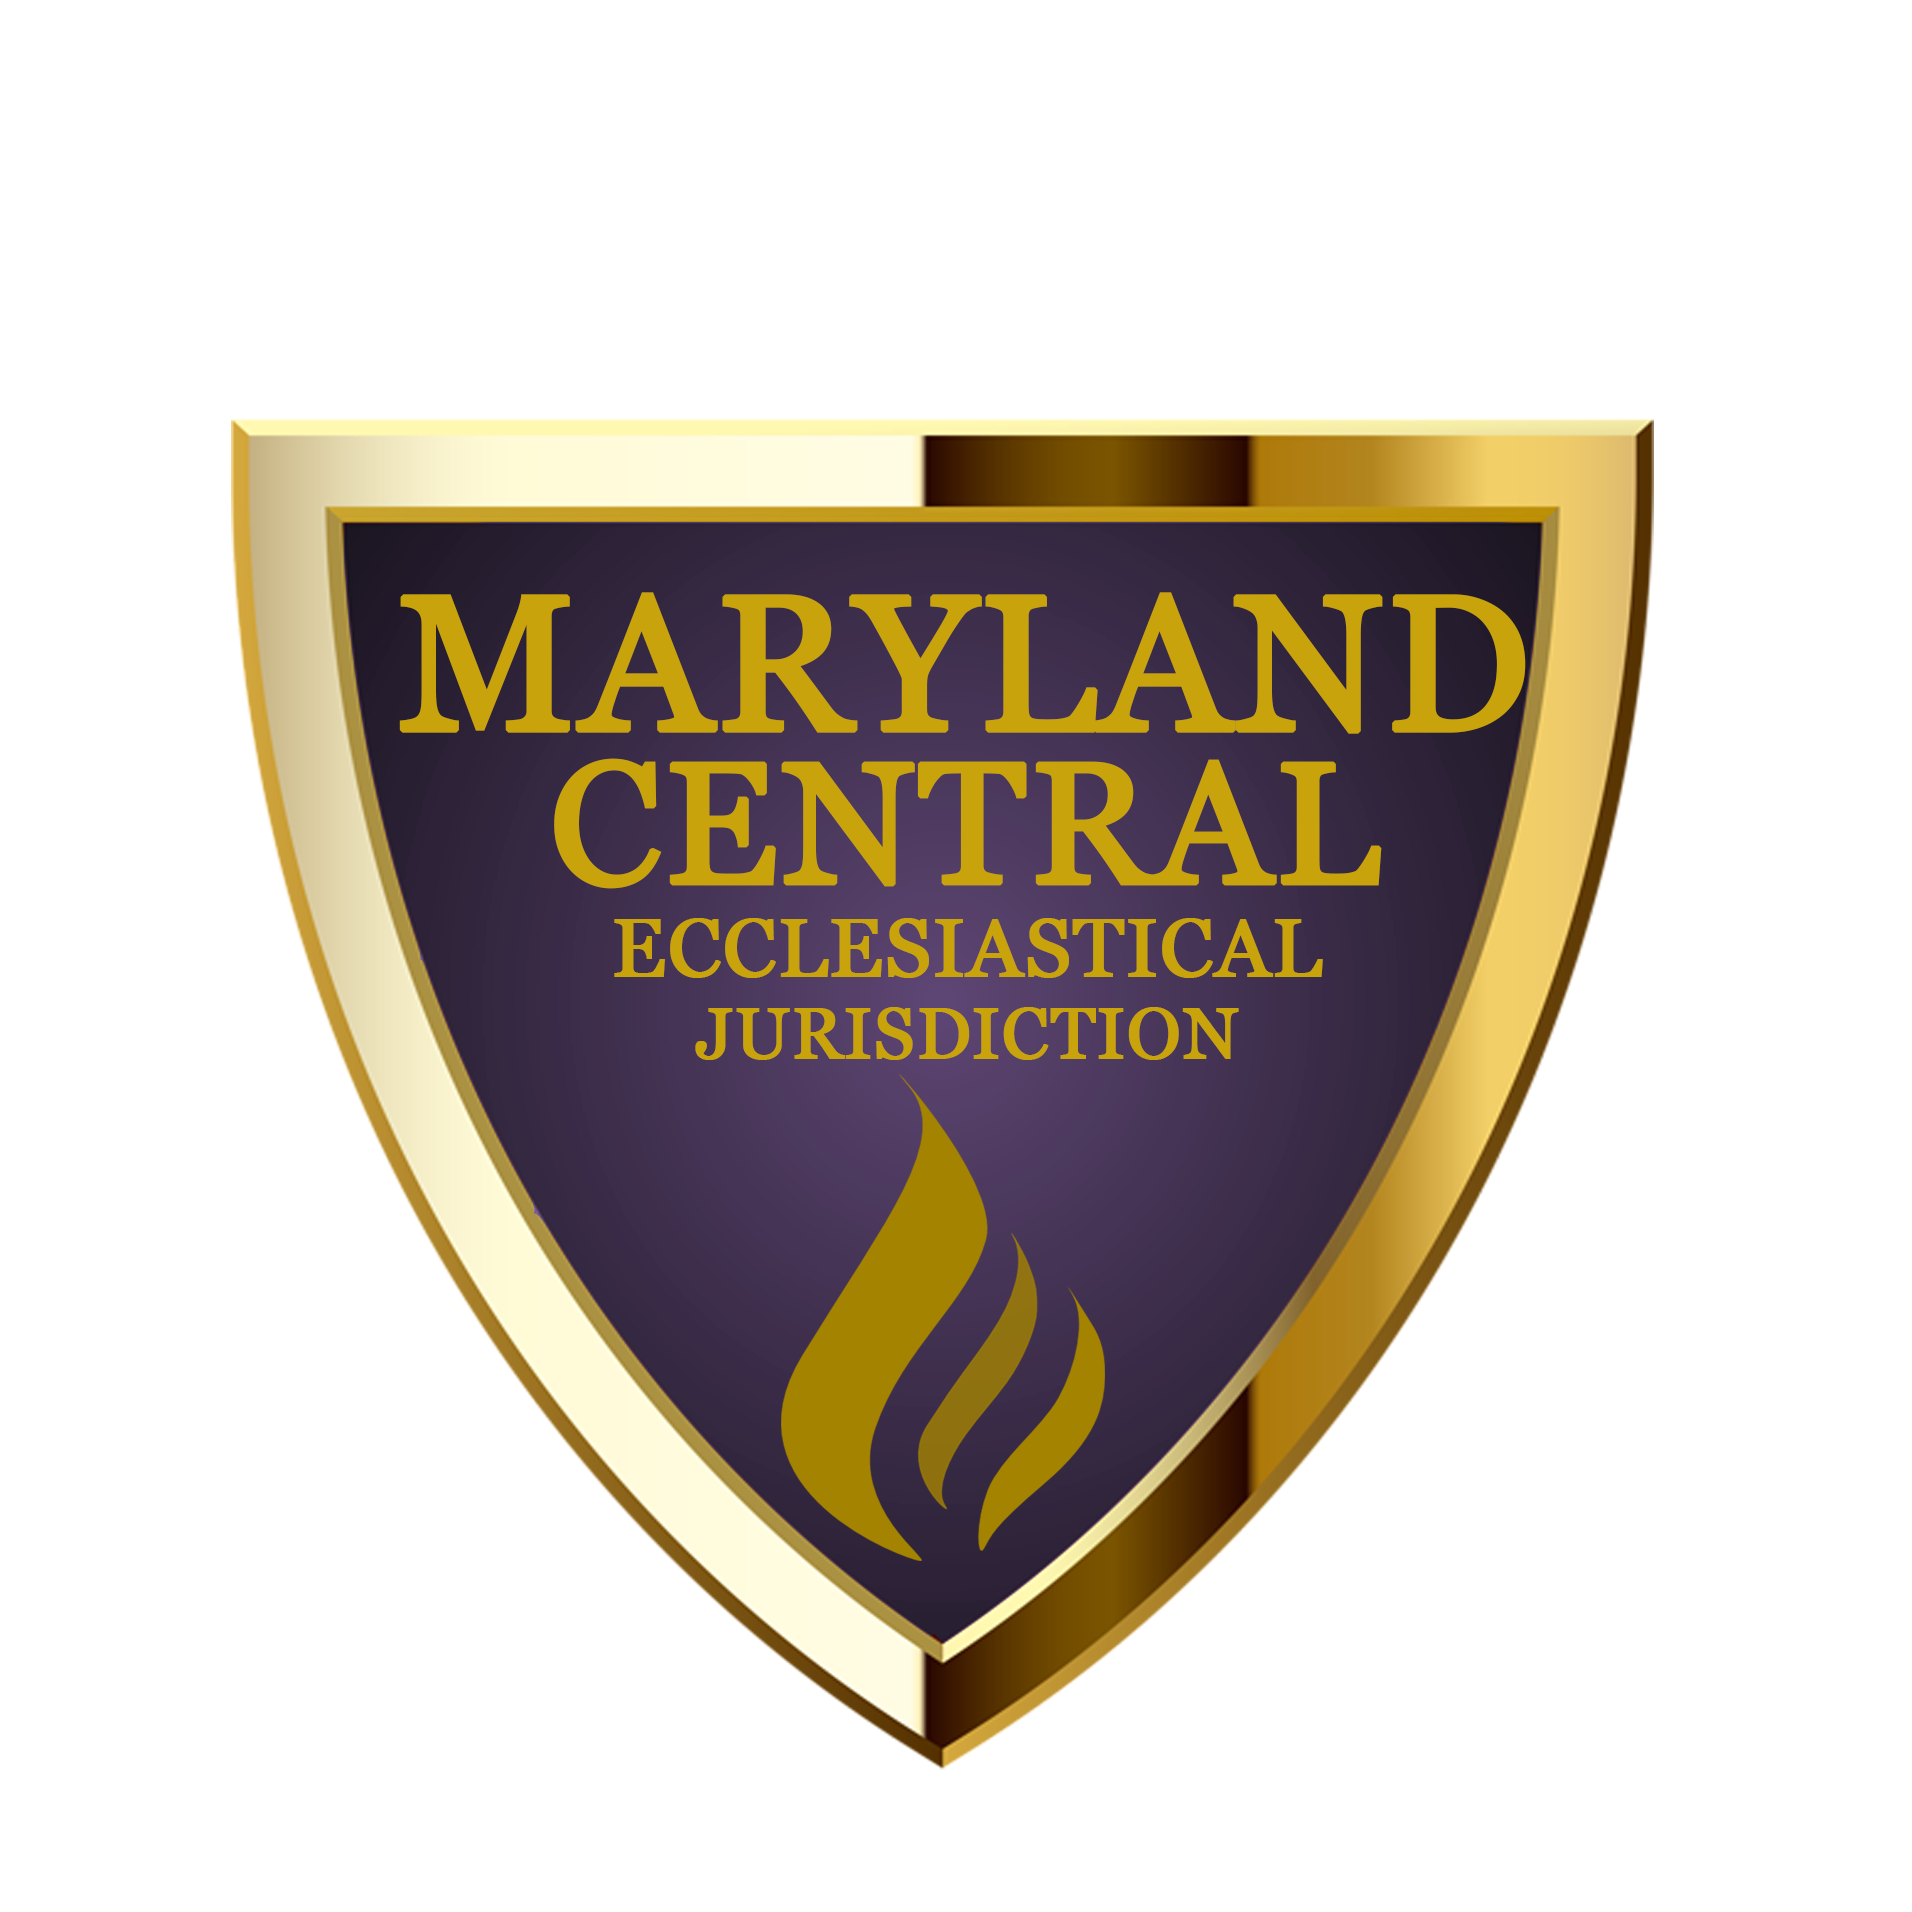 Maryland Central Ecclesiastical Jurisdiction